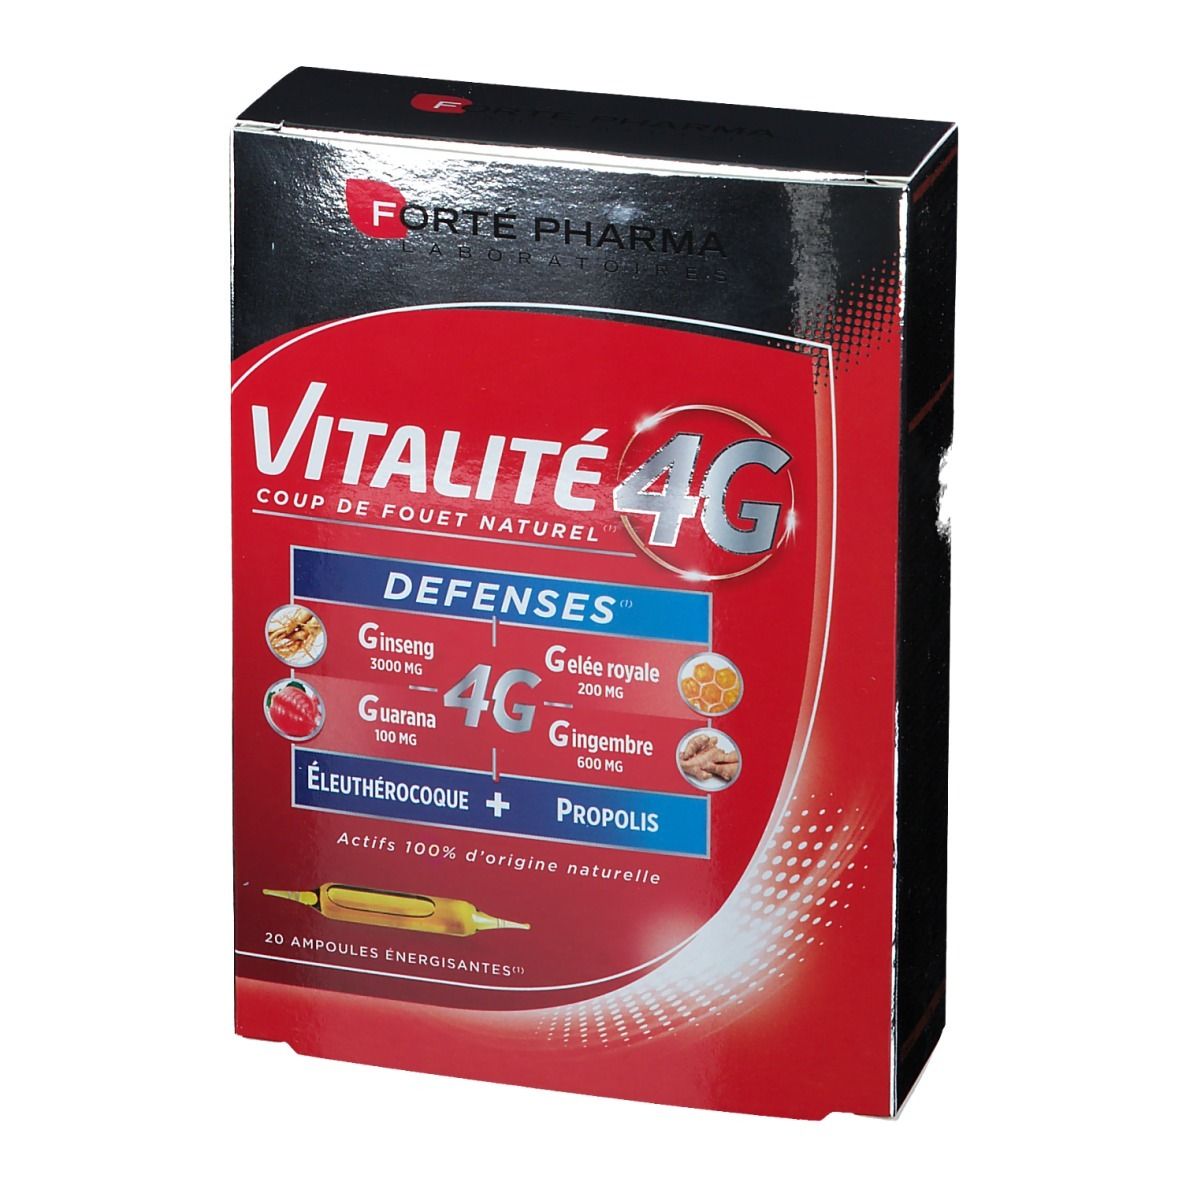 Vitalite 4G Resistance